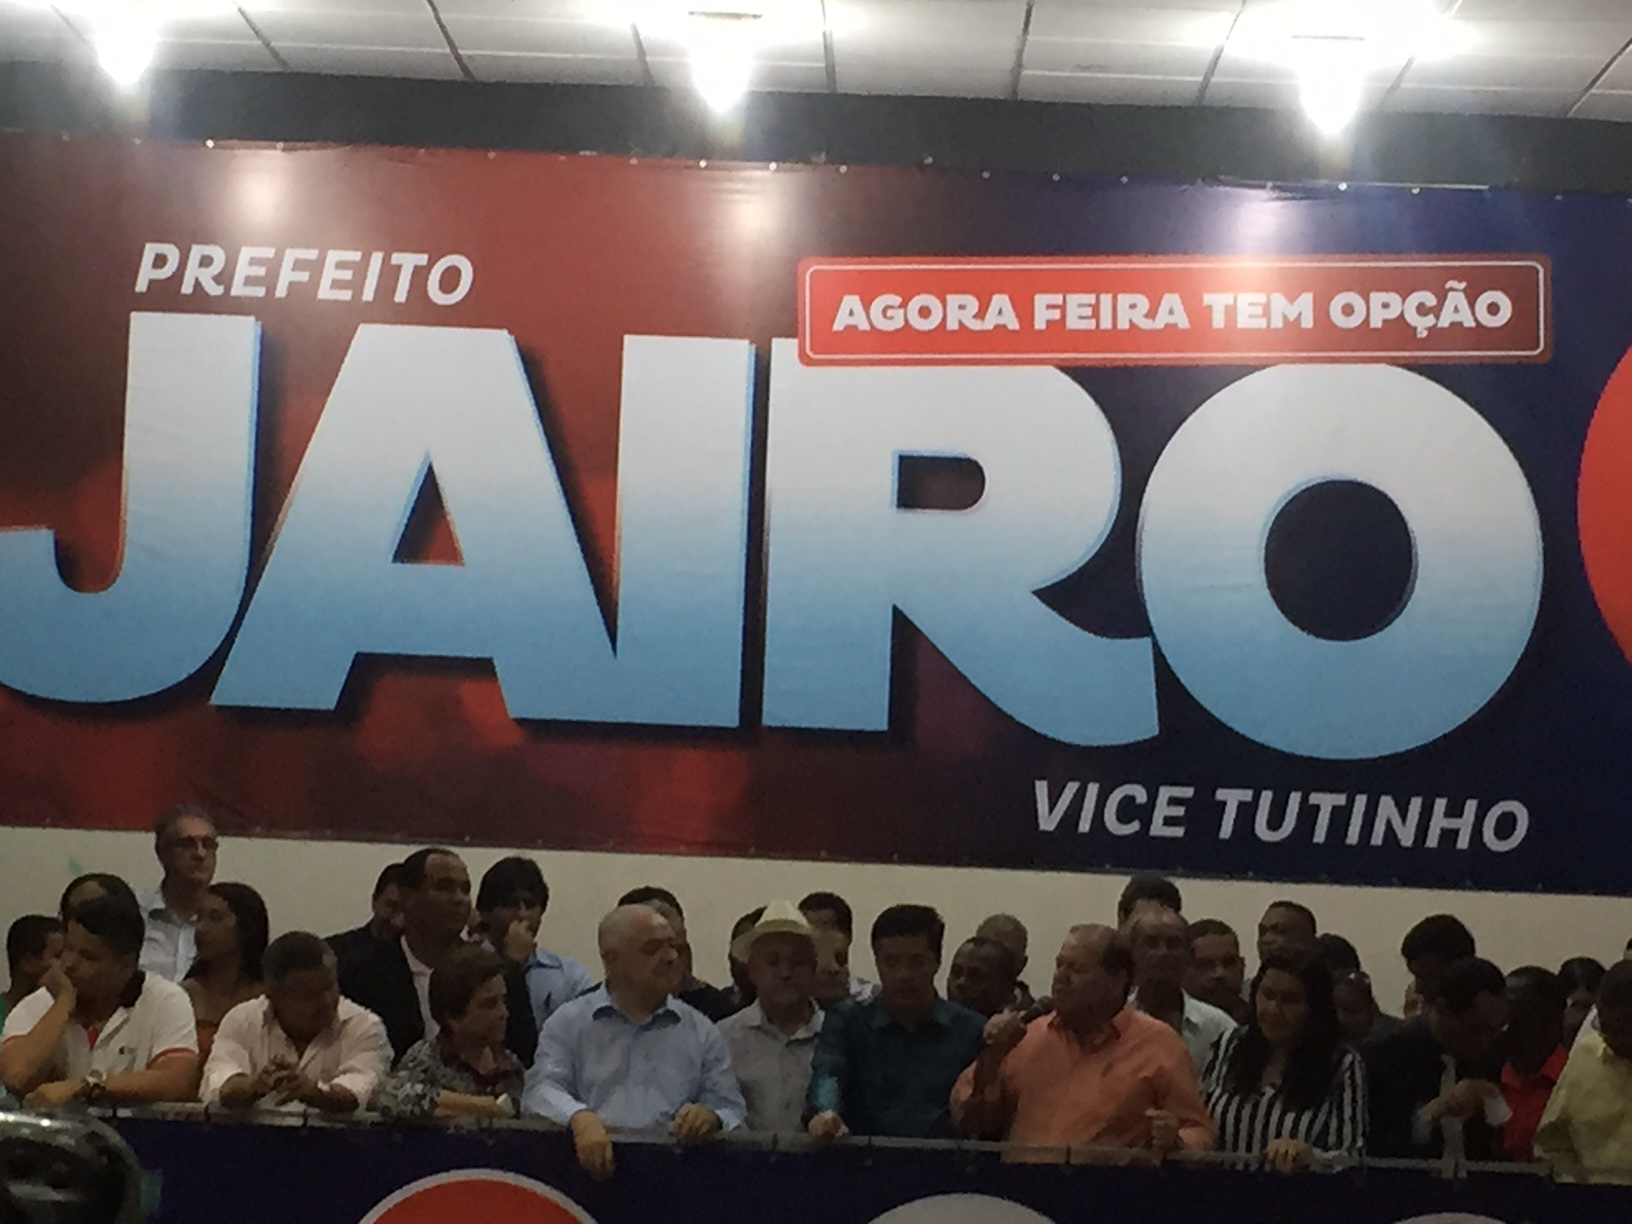 Conveno oficializa Jairo Carneiro candidato a prefeito 